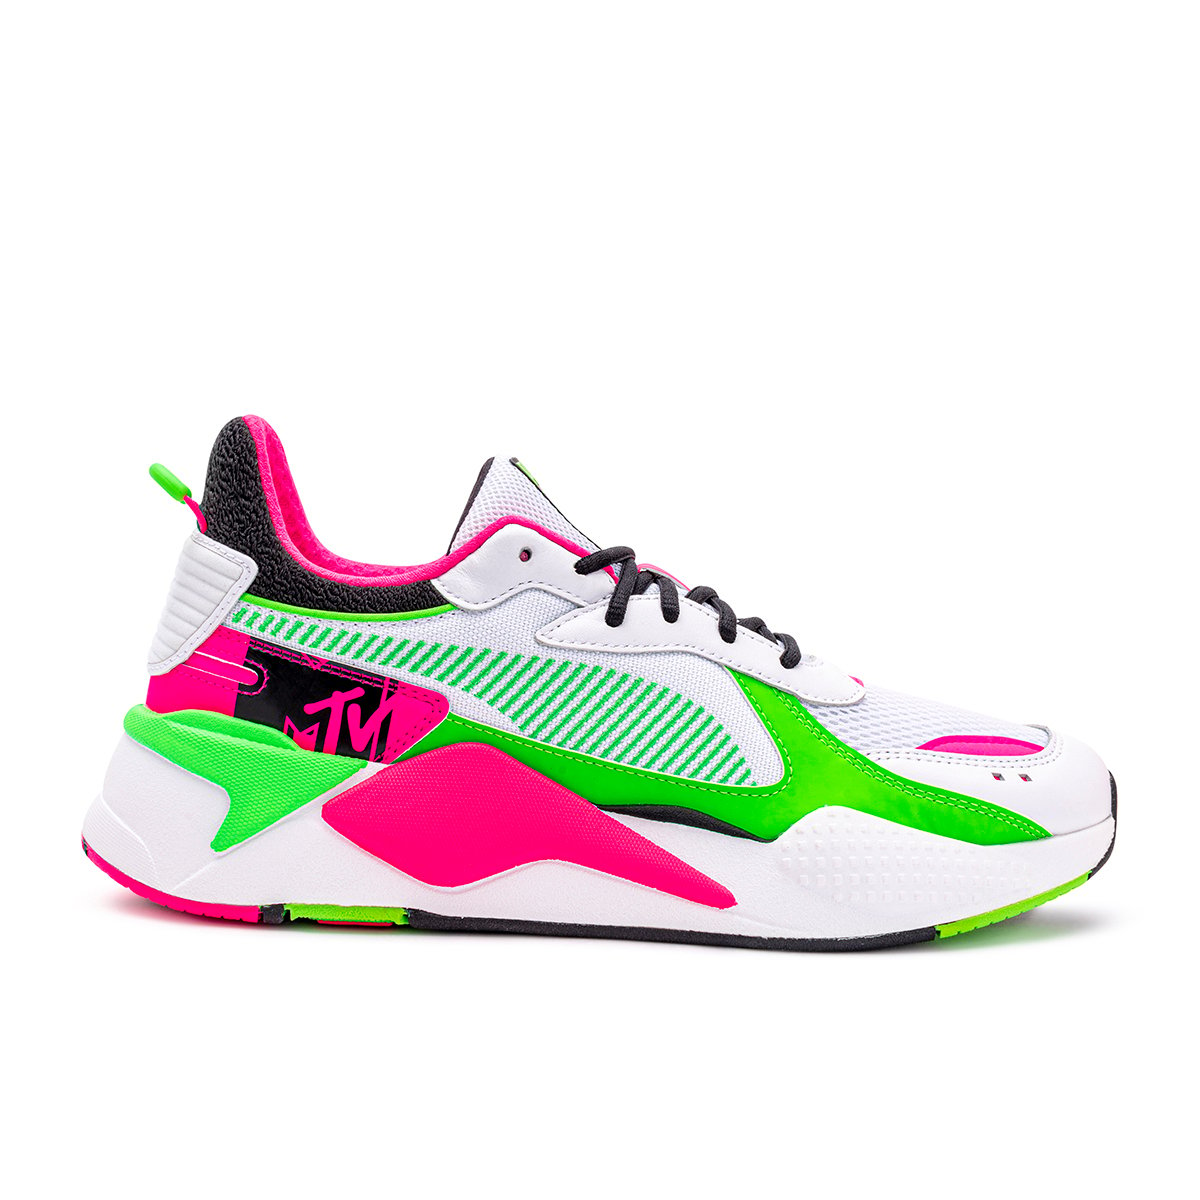 Puma RS-X TRACKS MTV BOLD - Men's Shoes online | Foot Locker UAE